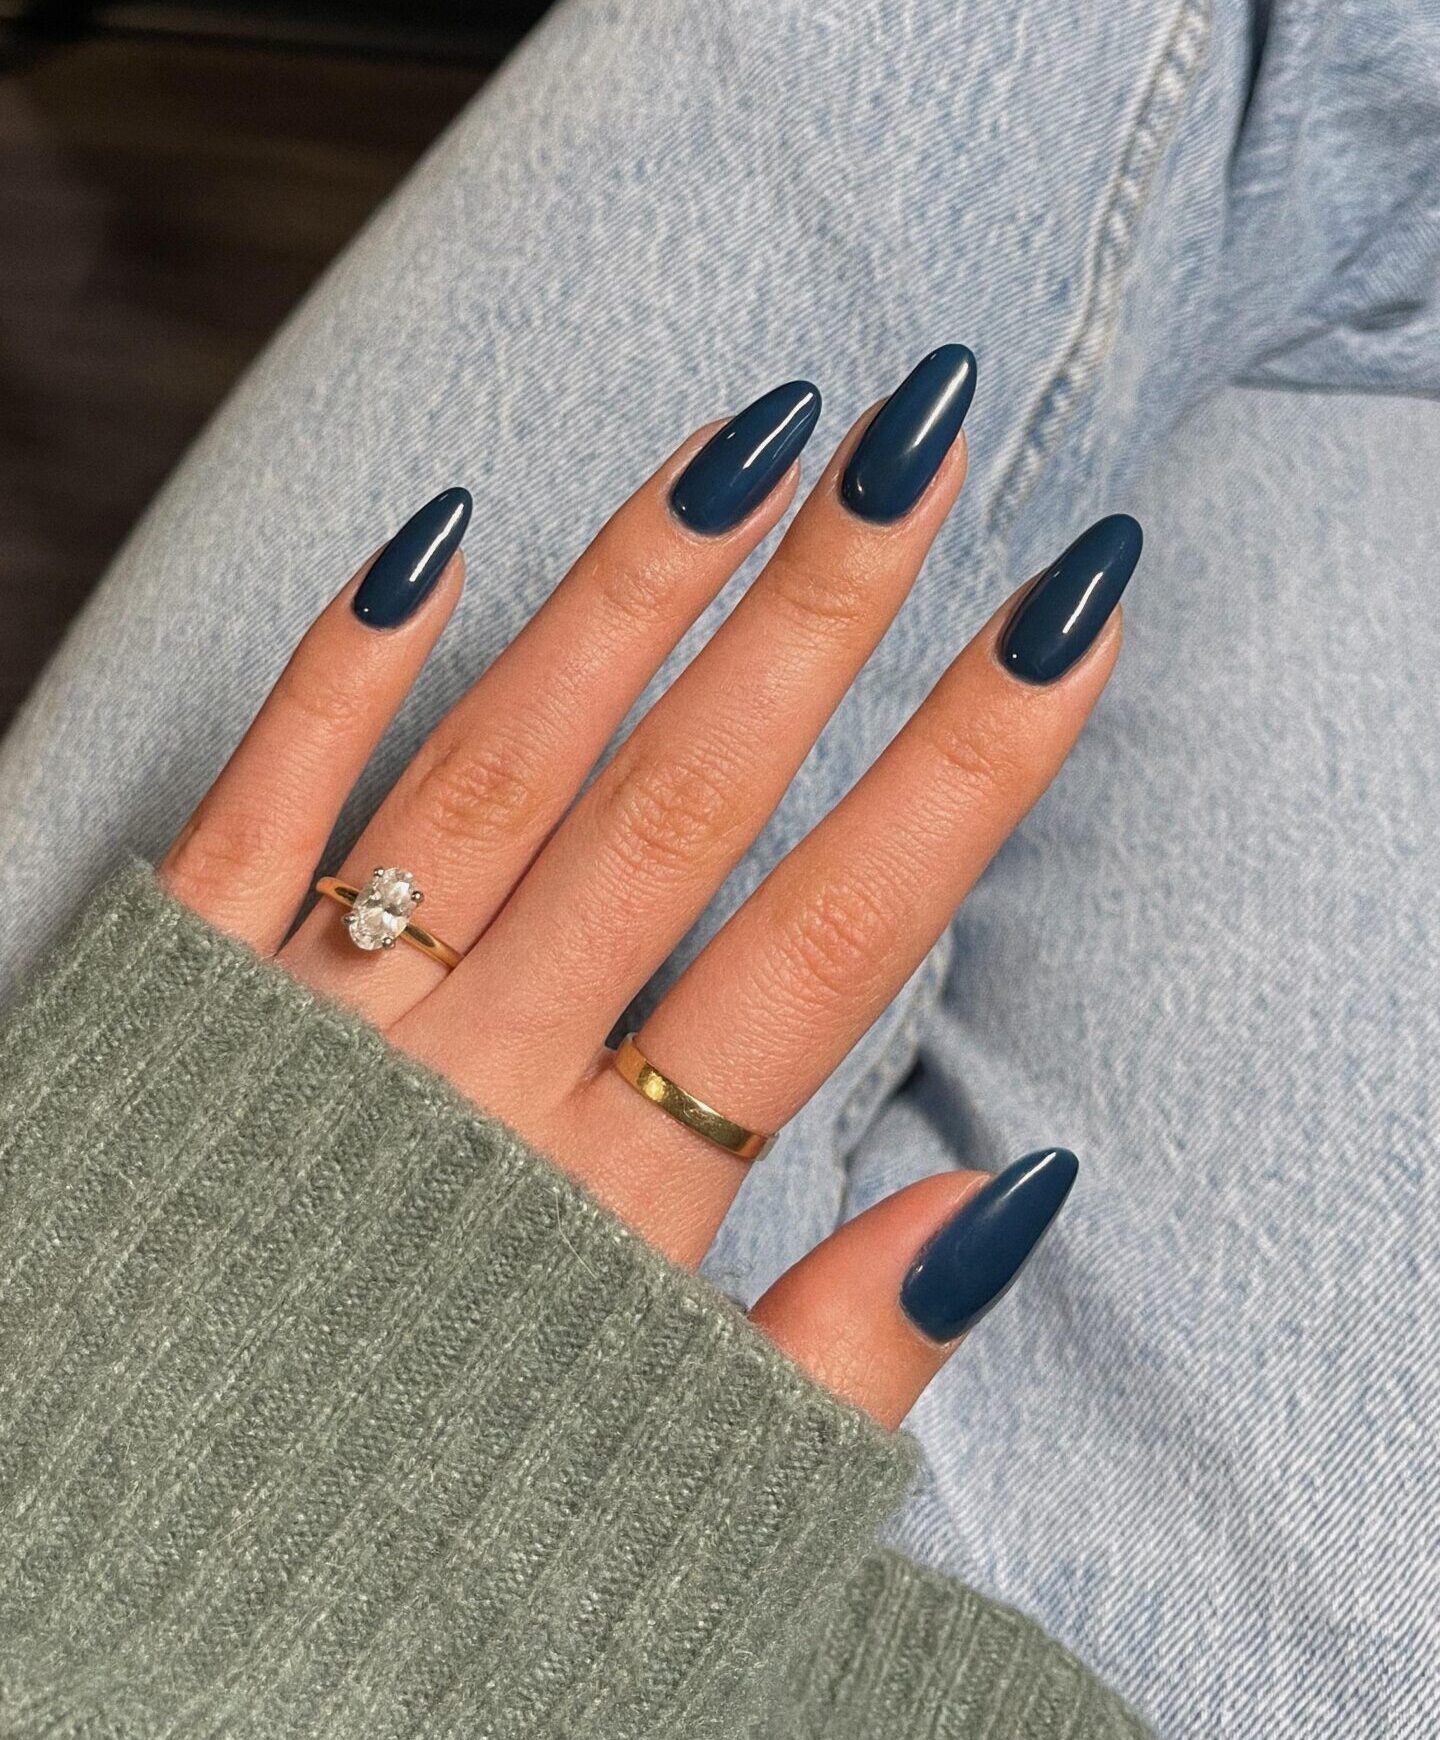 navy nails, navy blue nails, navy nails design, navy nails acrylic, navy nail ideas, navy nail art, navy nail polis, navy nails inspiration, navy blue nails acrylic